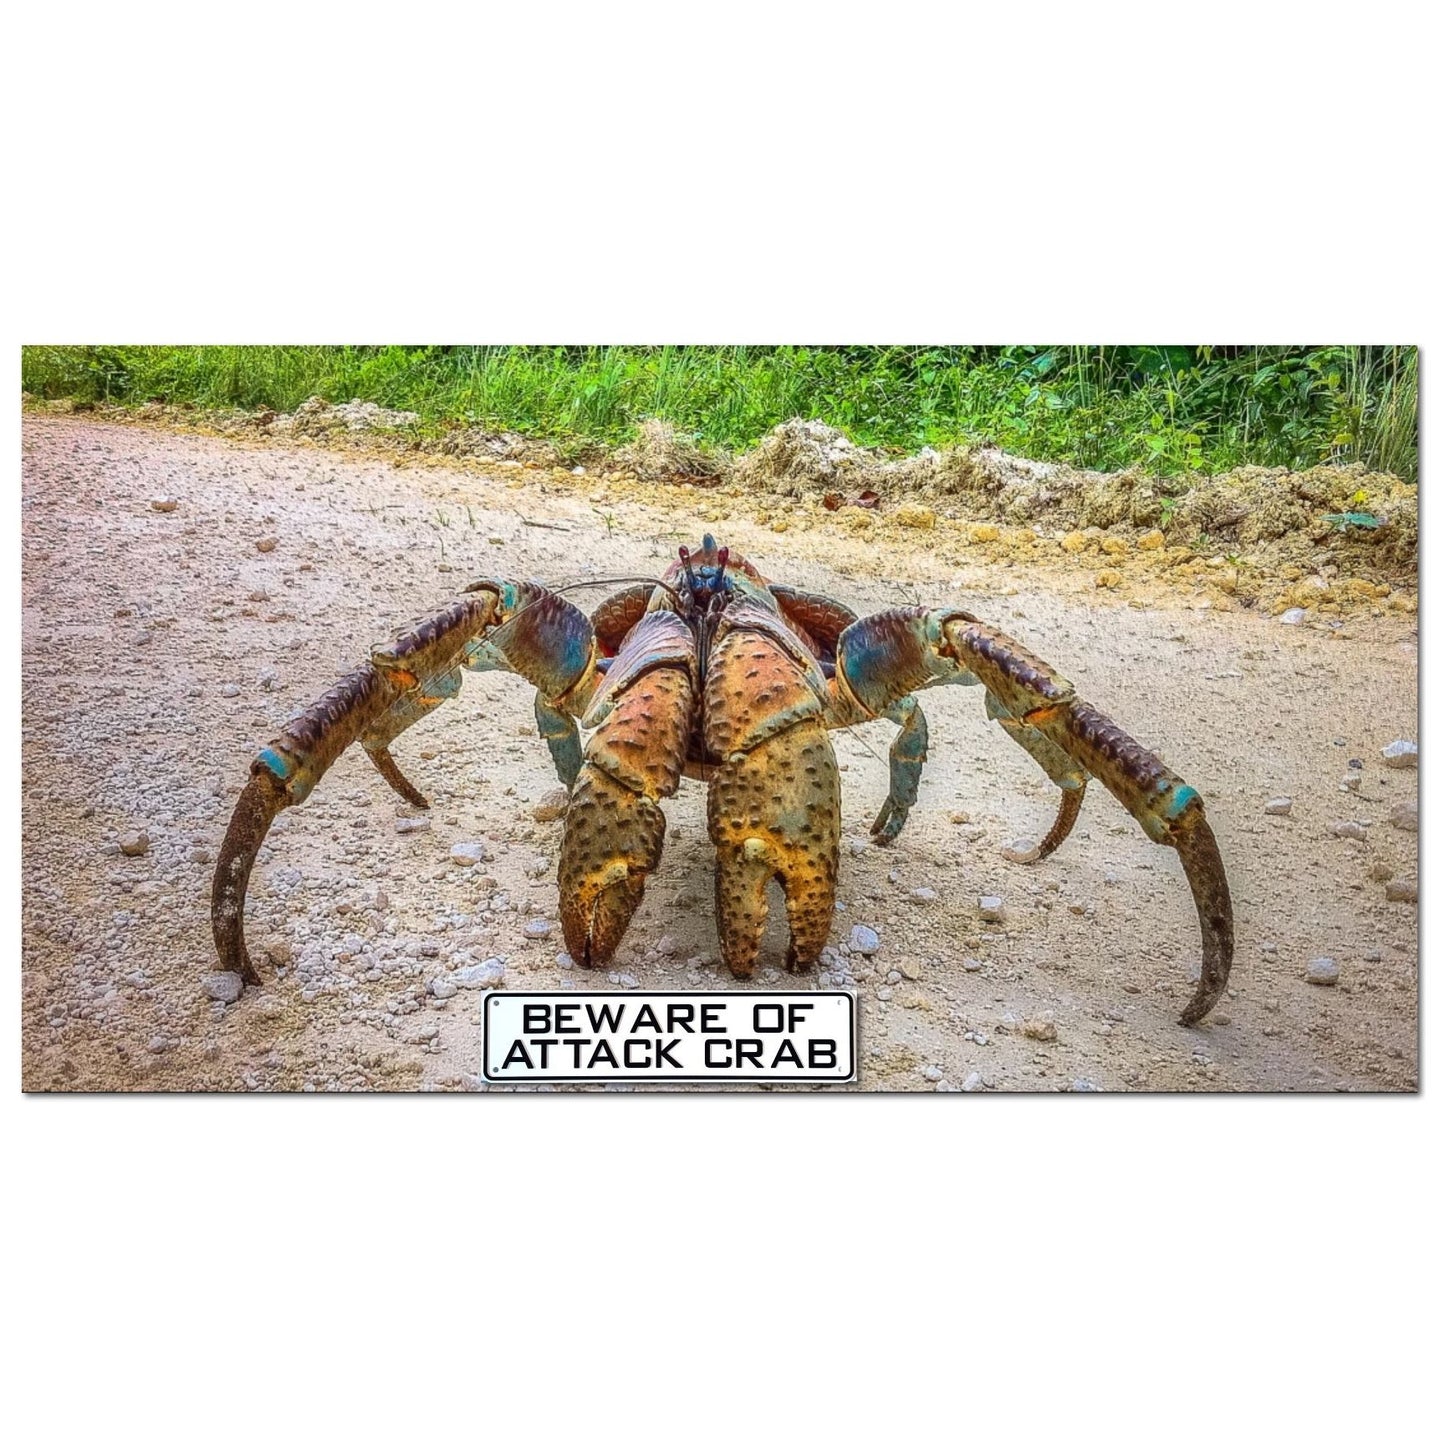 Beware of Attack Crab Sign Solid Plastic 12 X 3